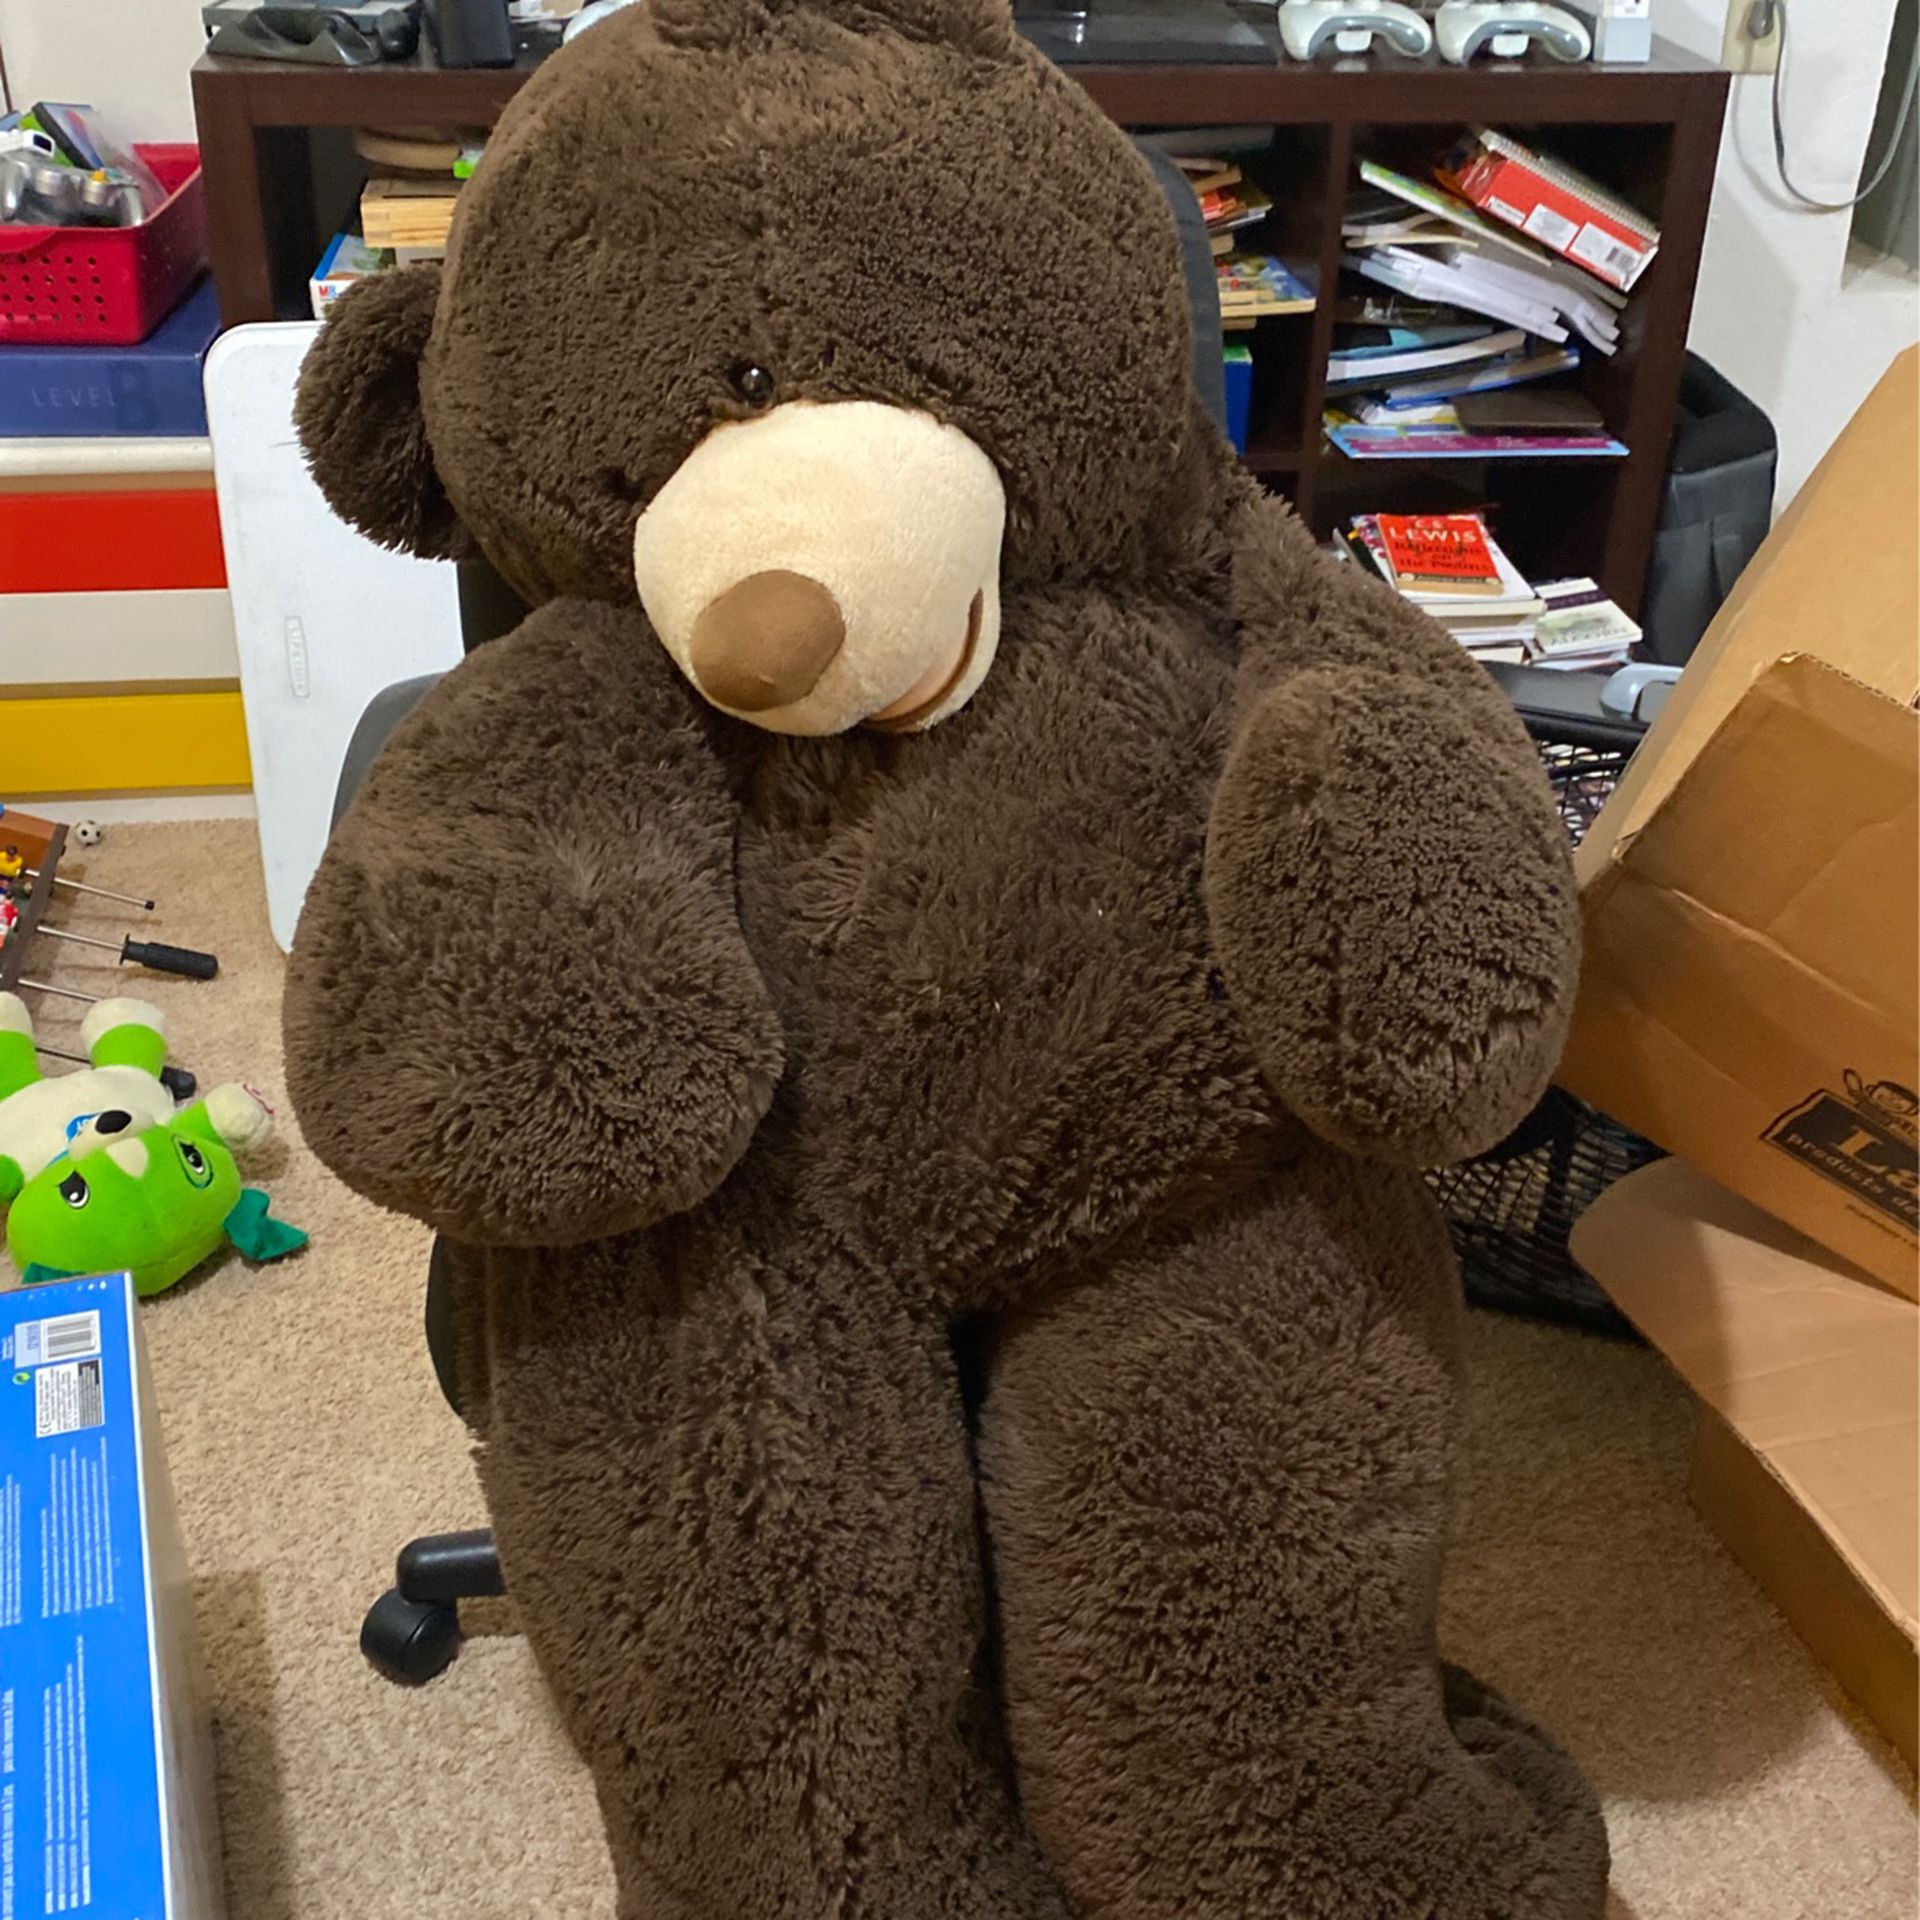 Giant Teddy Bear From Costco - 5 Feet Tall